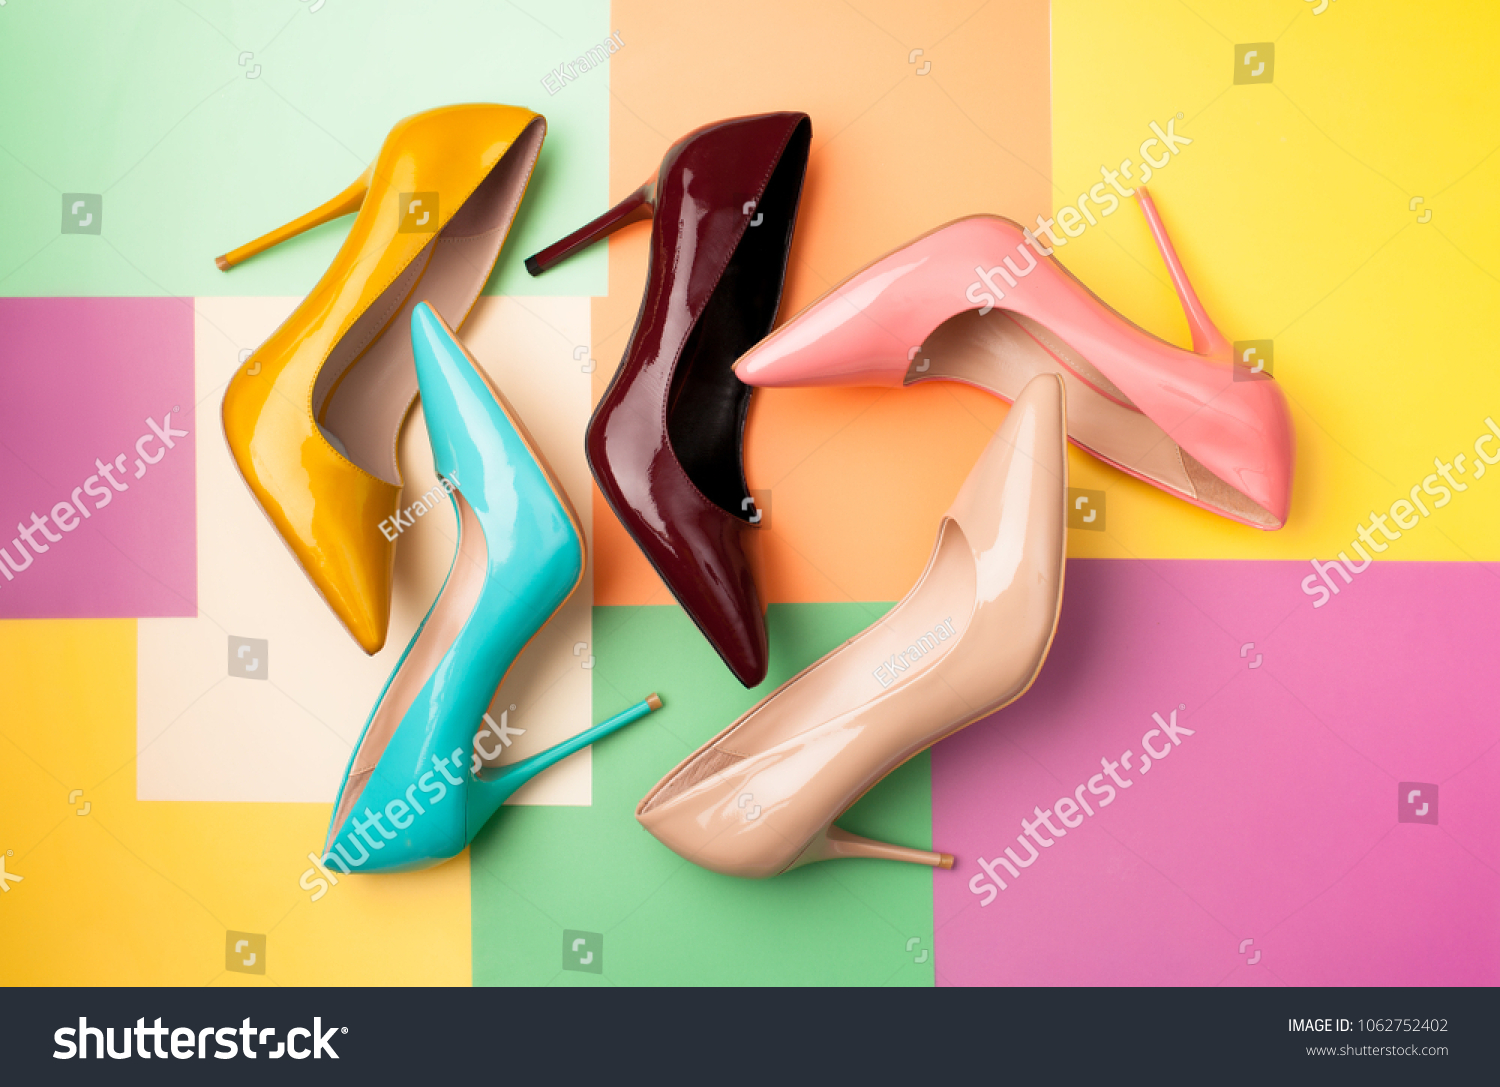 638,023 Footwear background Images, Stock Photos & Vectors | Shutterstock